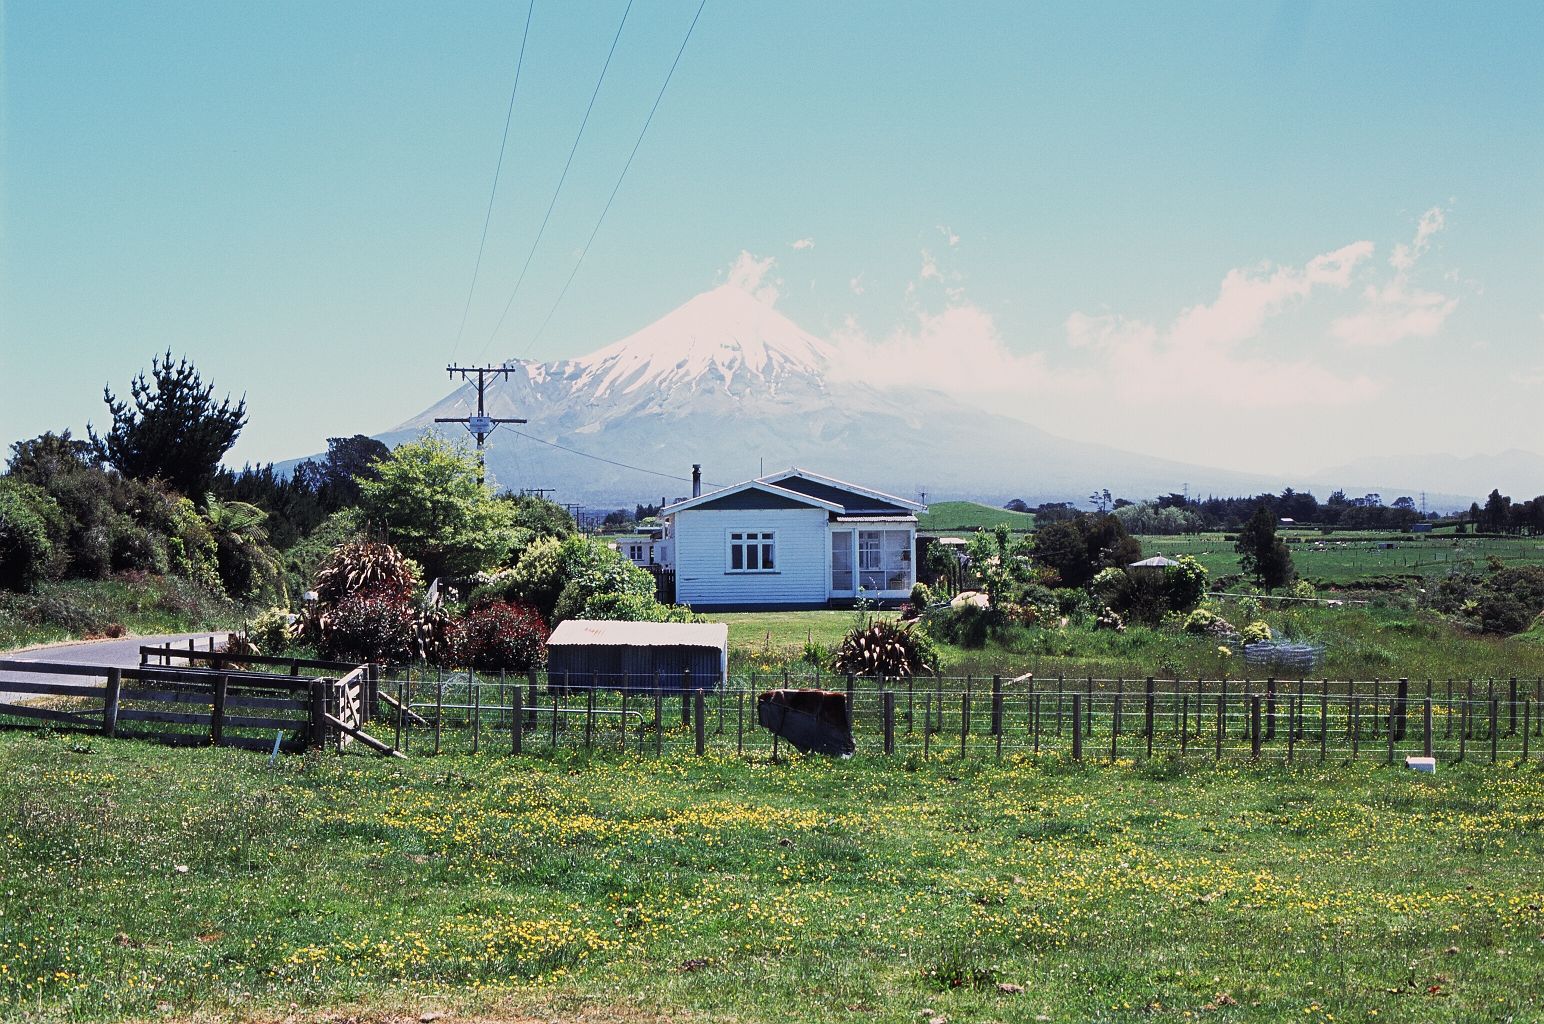 fotka / image Mt. Taranaki, z Aucklandu do Wellingtonu